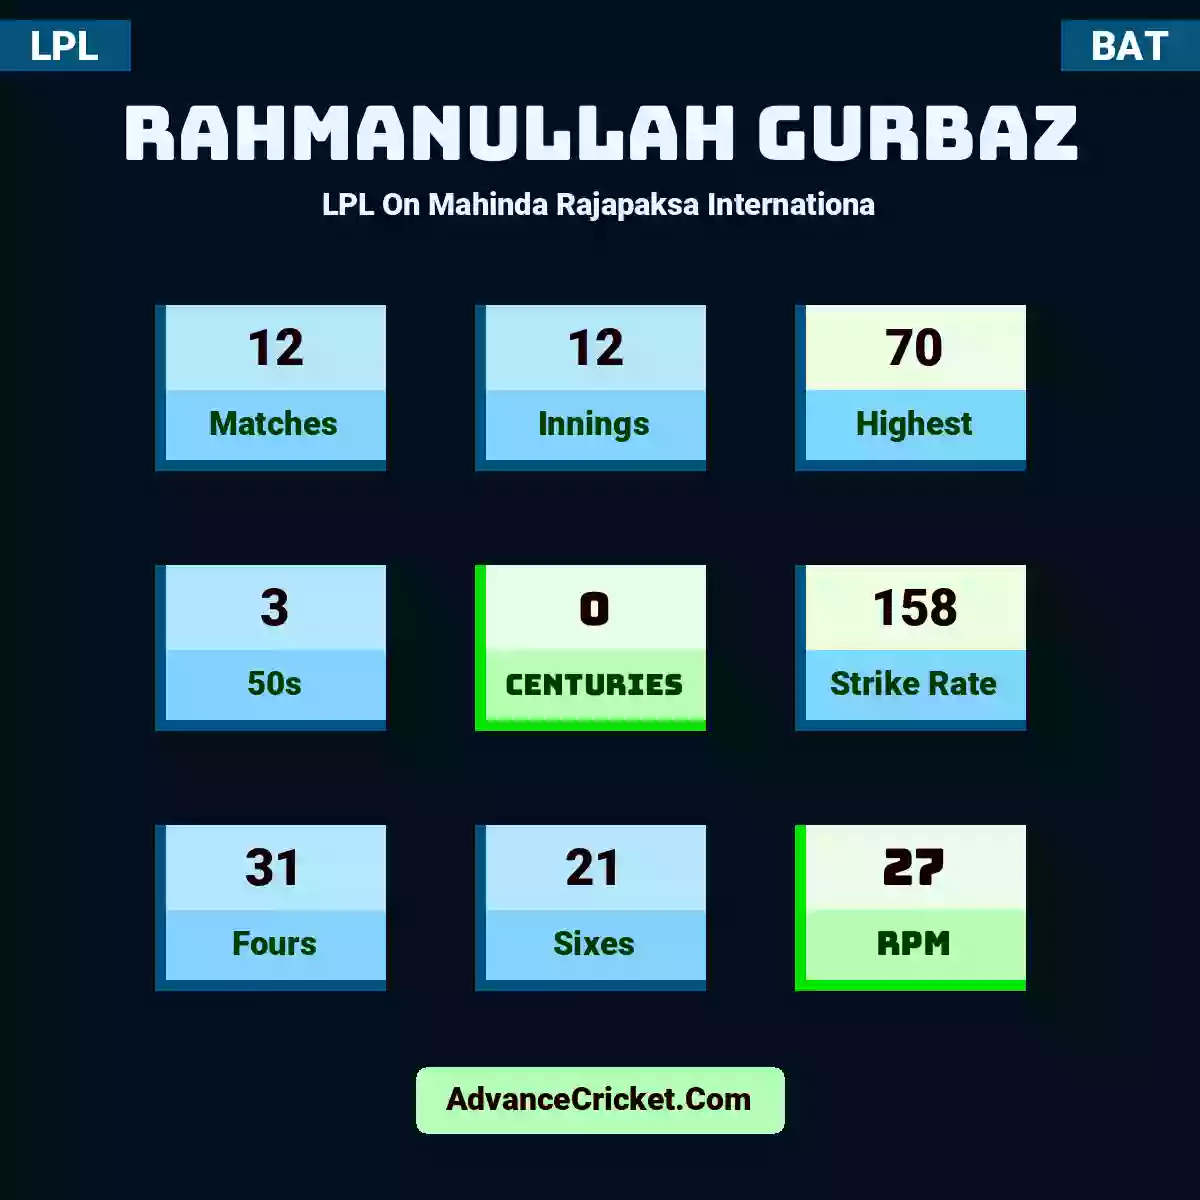 Rahmanullah Gurbaz LPL  On Mahinda Rajapaksa Internationa, Rahmanullah Gurbaz played 12 matches, scored 70 runs as highest, 3 half-centuries, and 0 centuries, with a strike rate of 158. R.Gurbaz hit 31 fours and 21 sixes, with an RPM of 27.